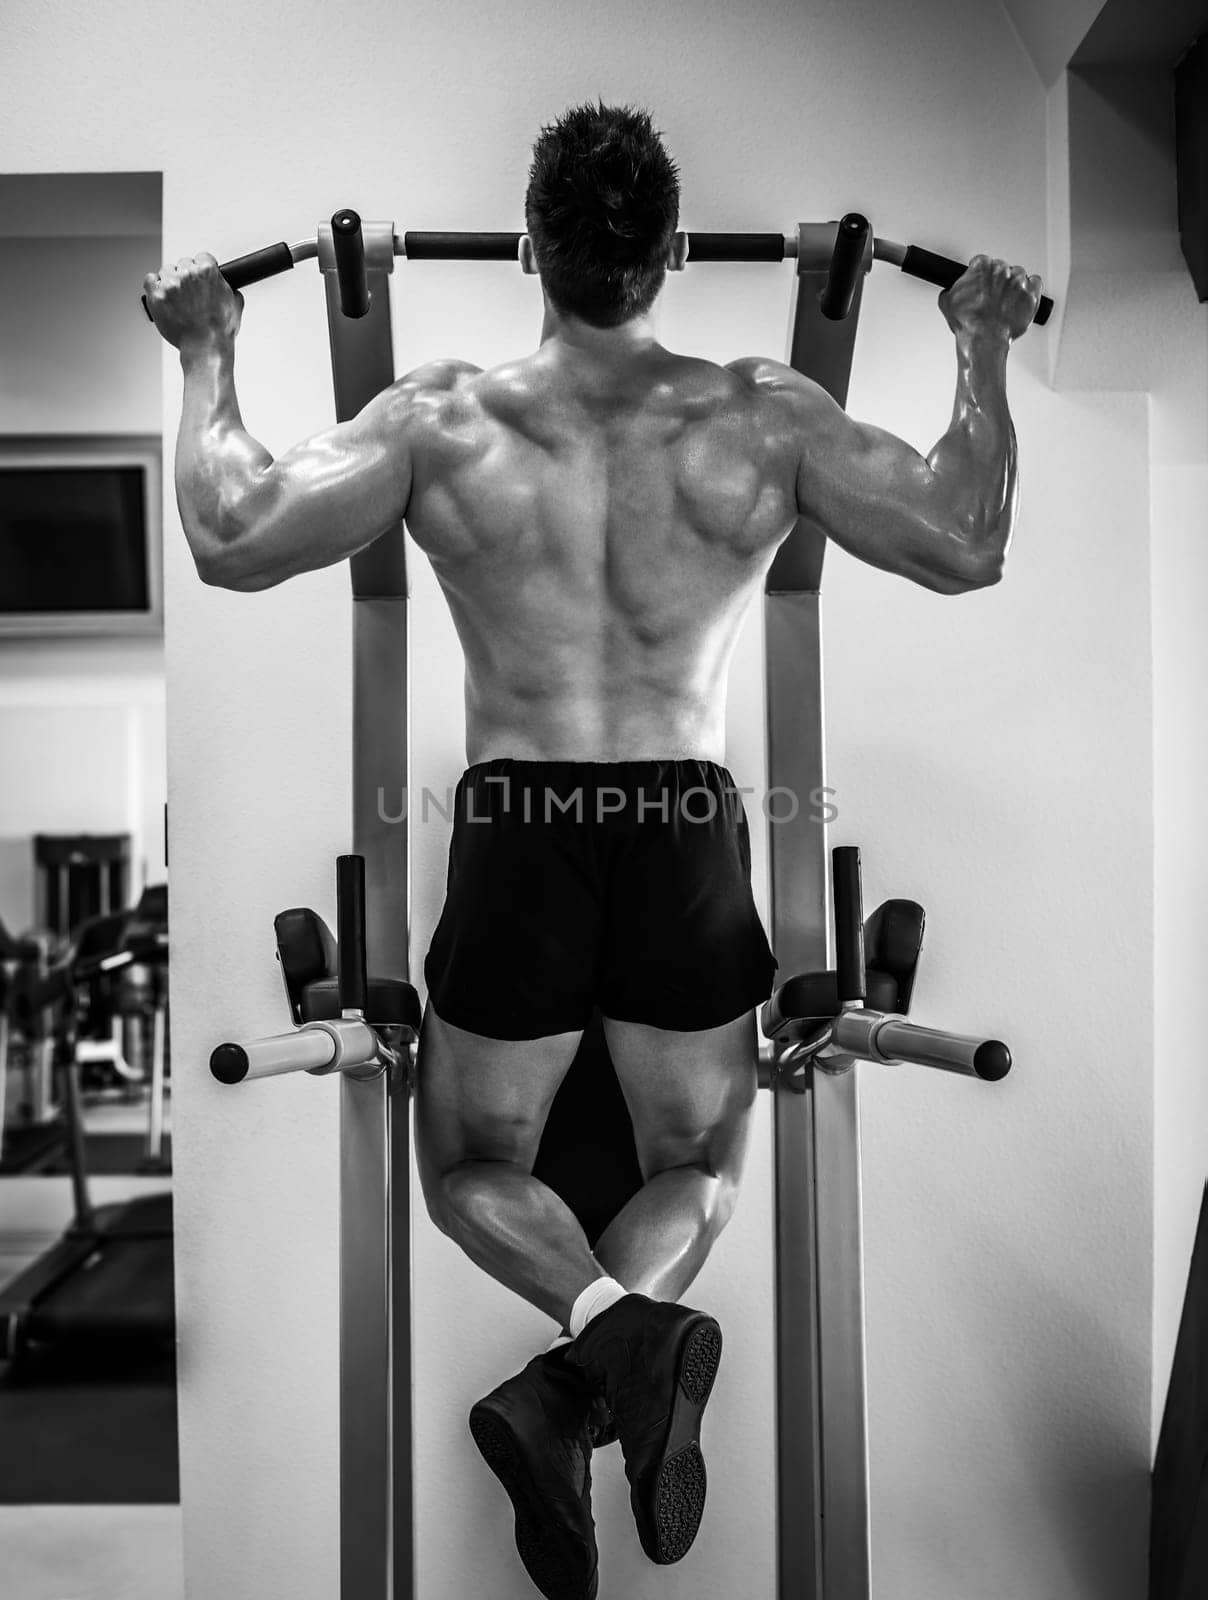 bodybuilder pulling up on a bar in a gym by GekaSkr